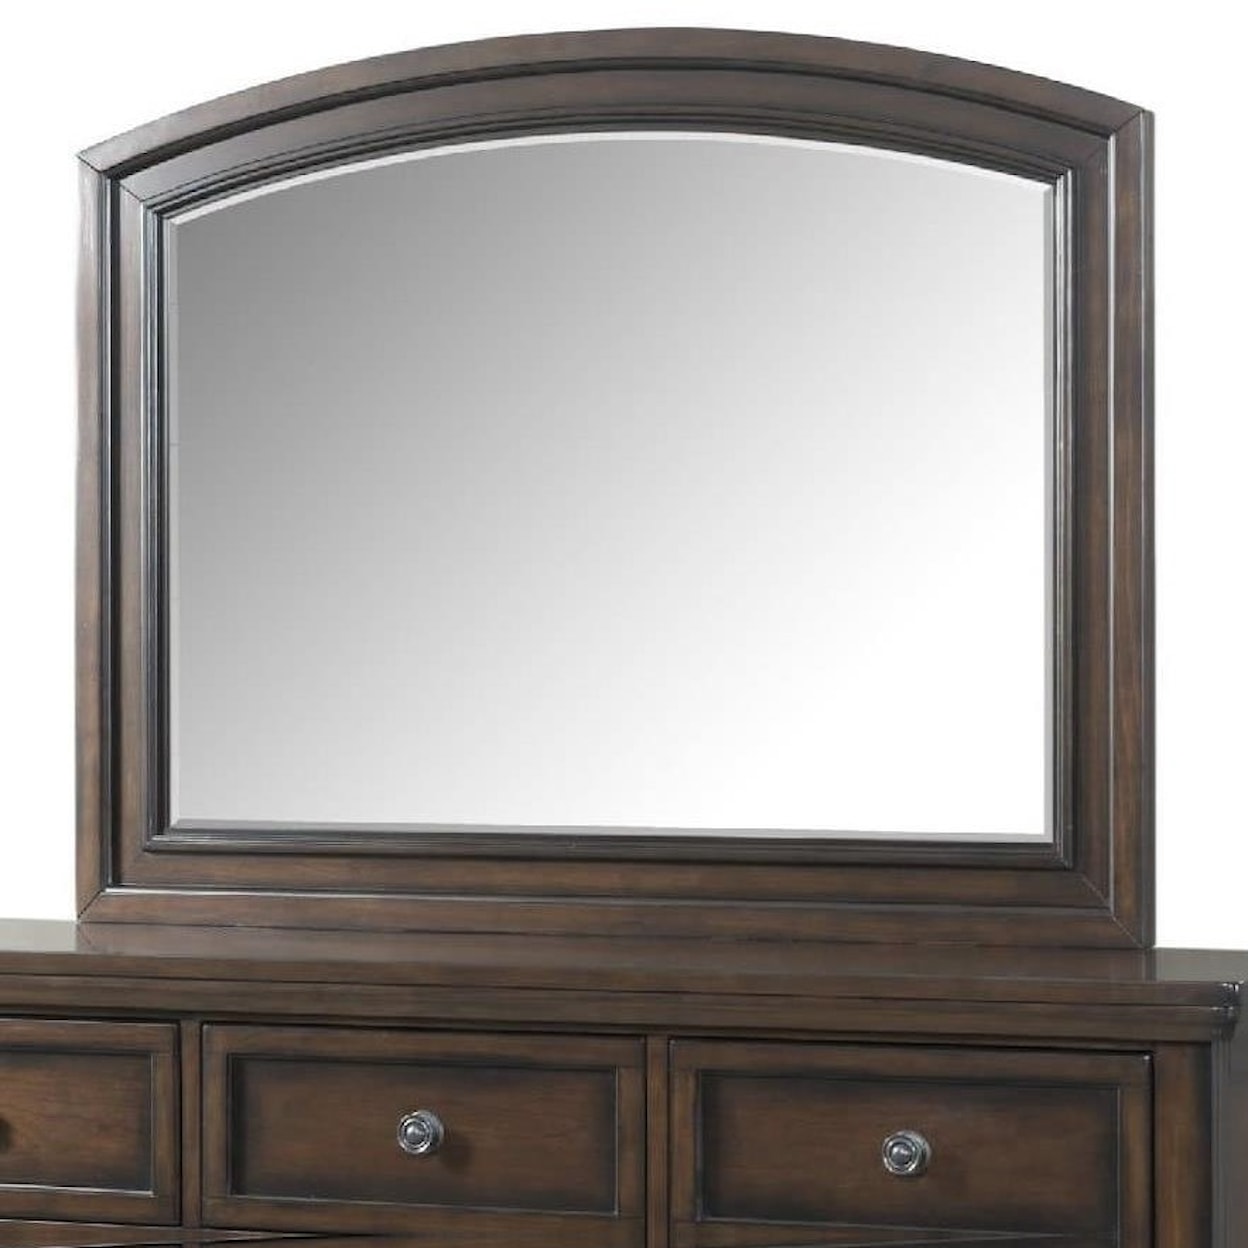 Elements International Kingston Mirror with Wood Frame